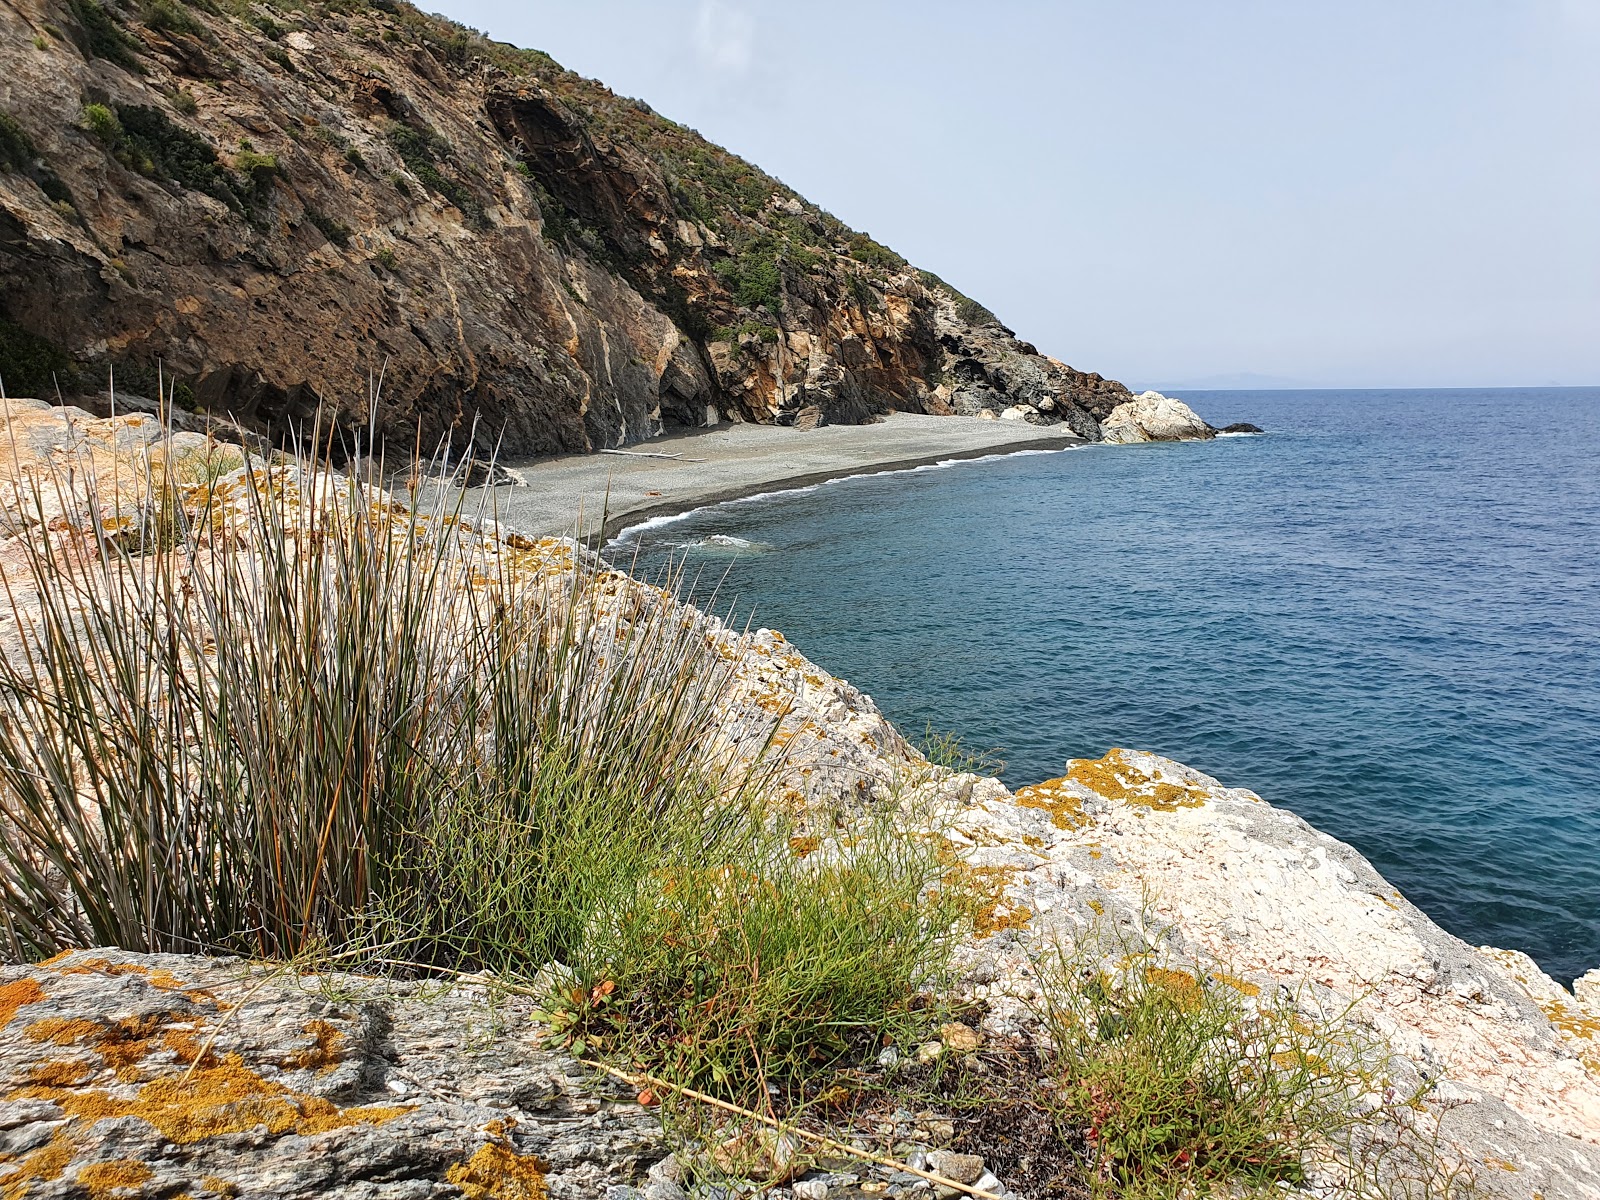 Photo of Spiaggia del Ginepro with straight shore